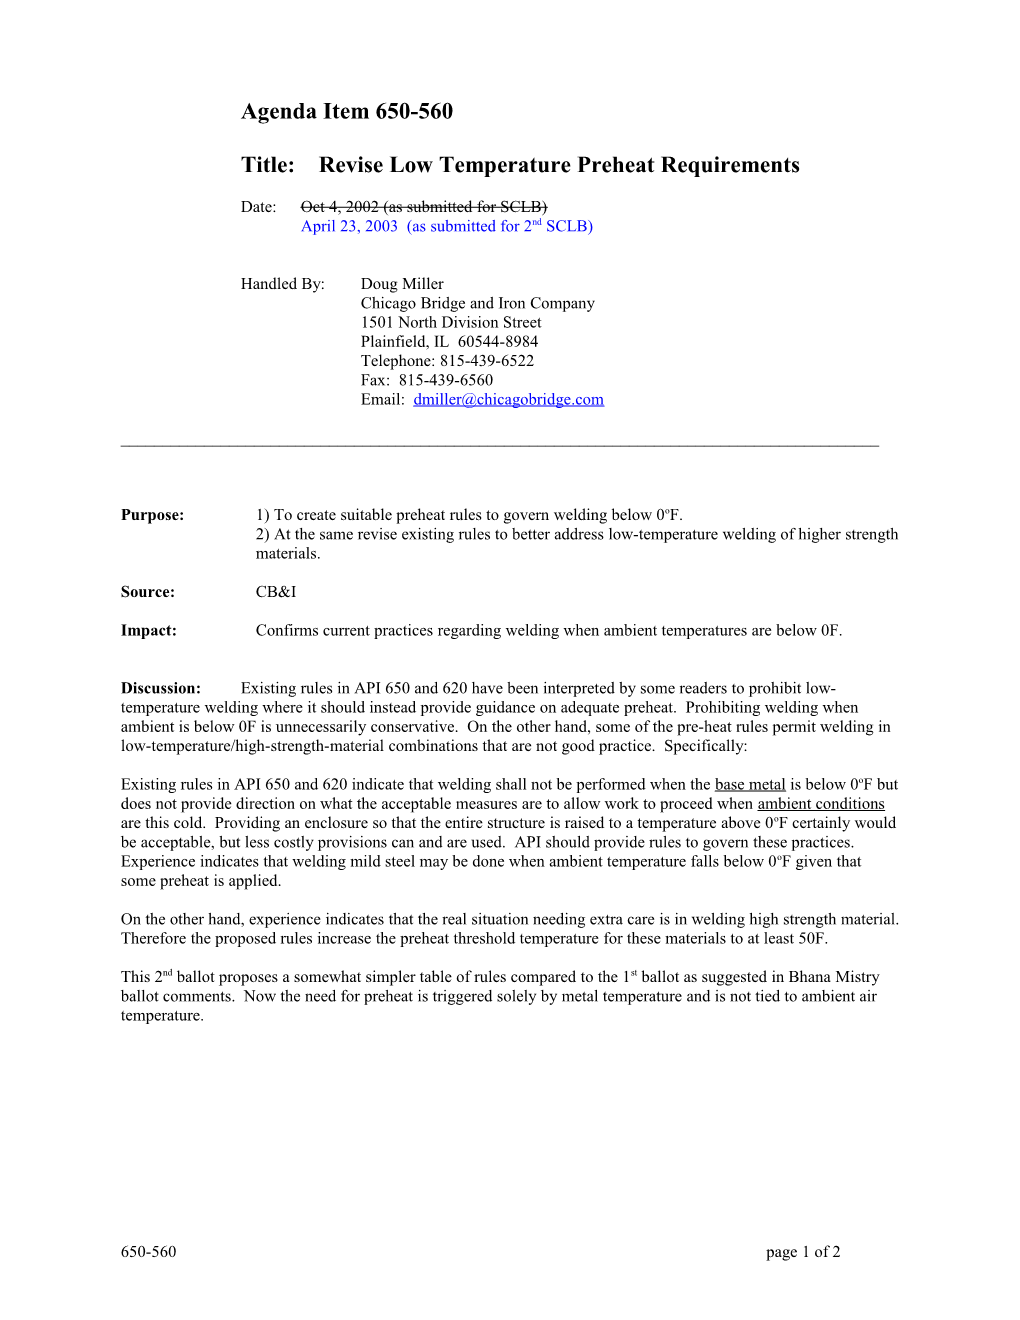 Title: Revise Low Temperature Preheat Requirements